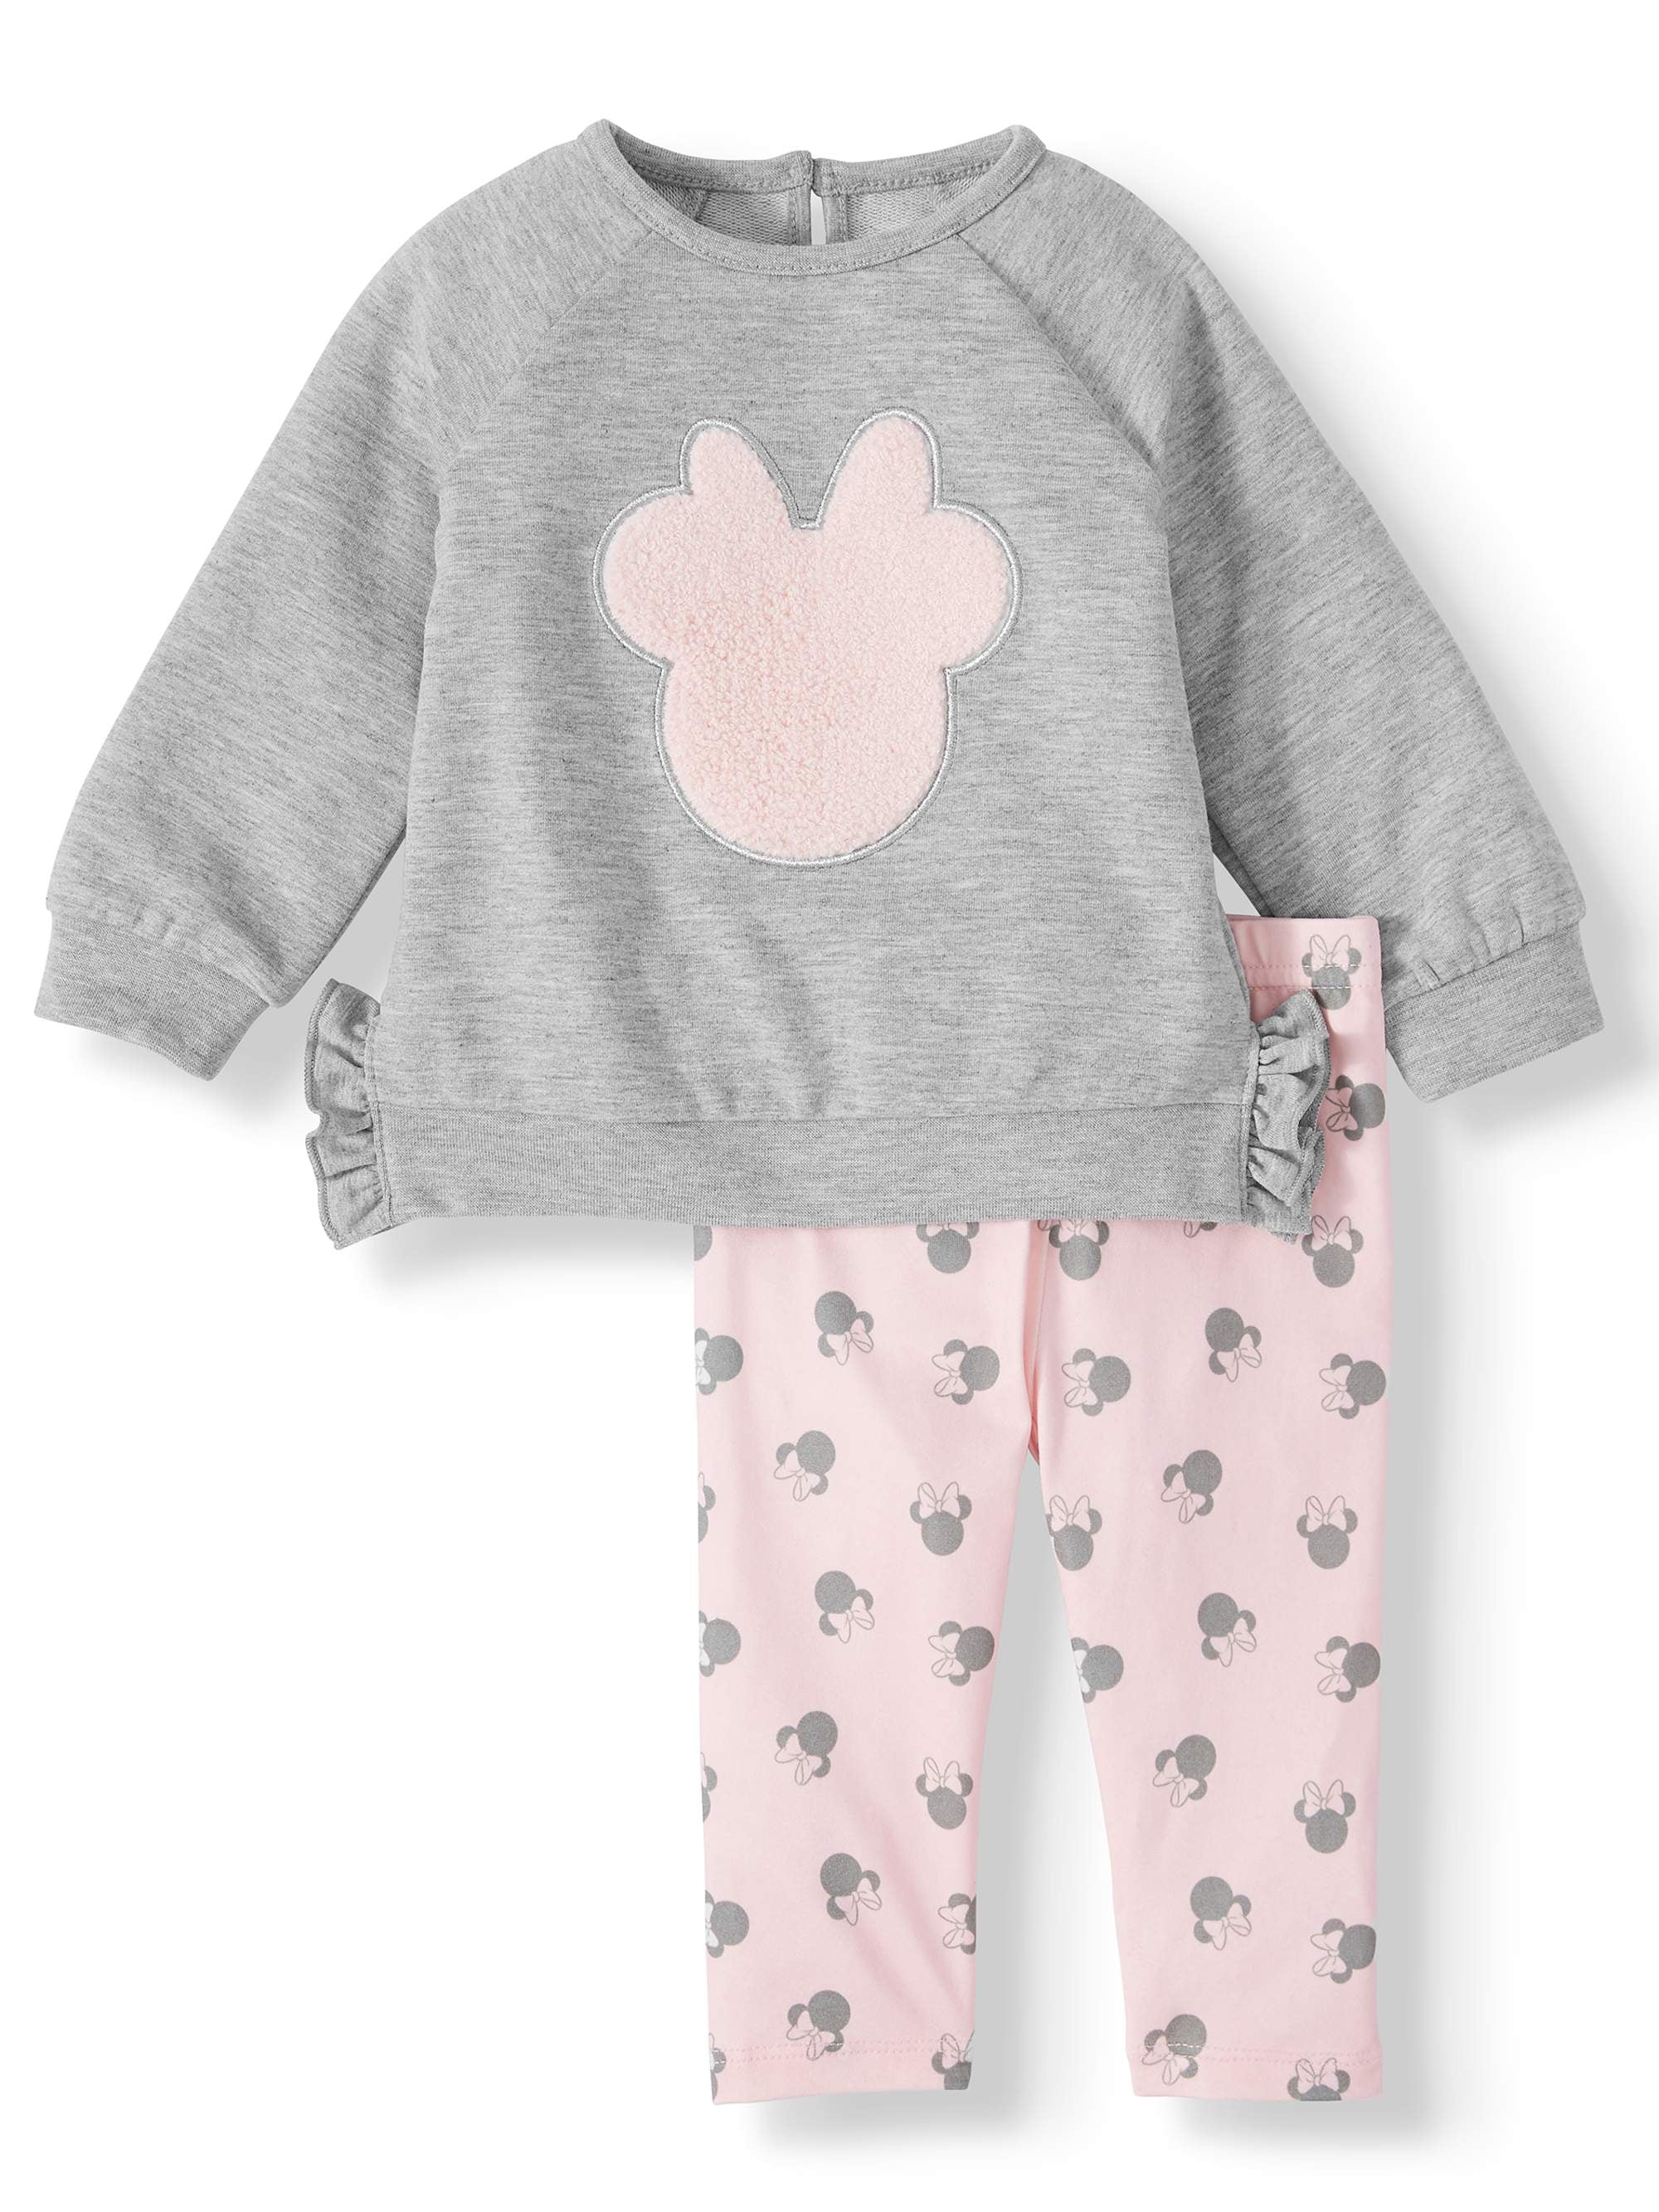 Disney Baby Mädchen Set Shirt Hose Minnie Mouse rosa 